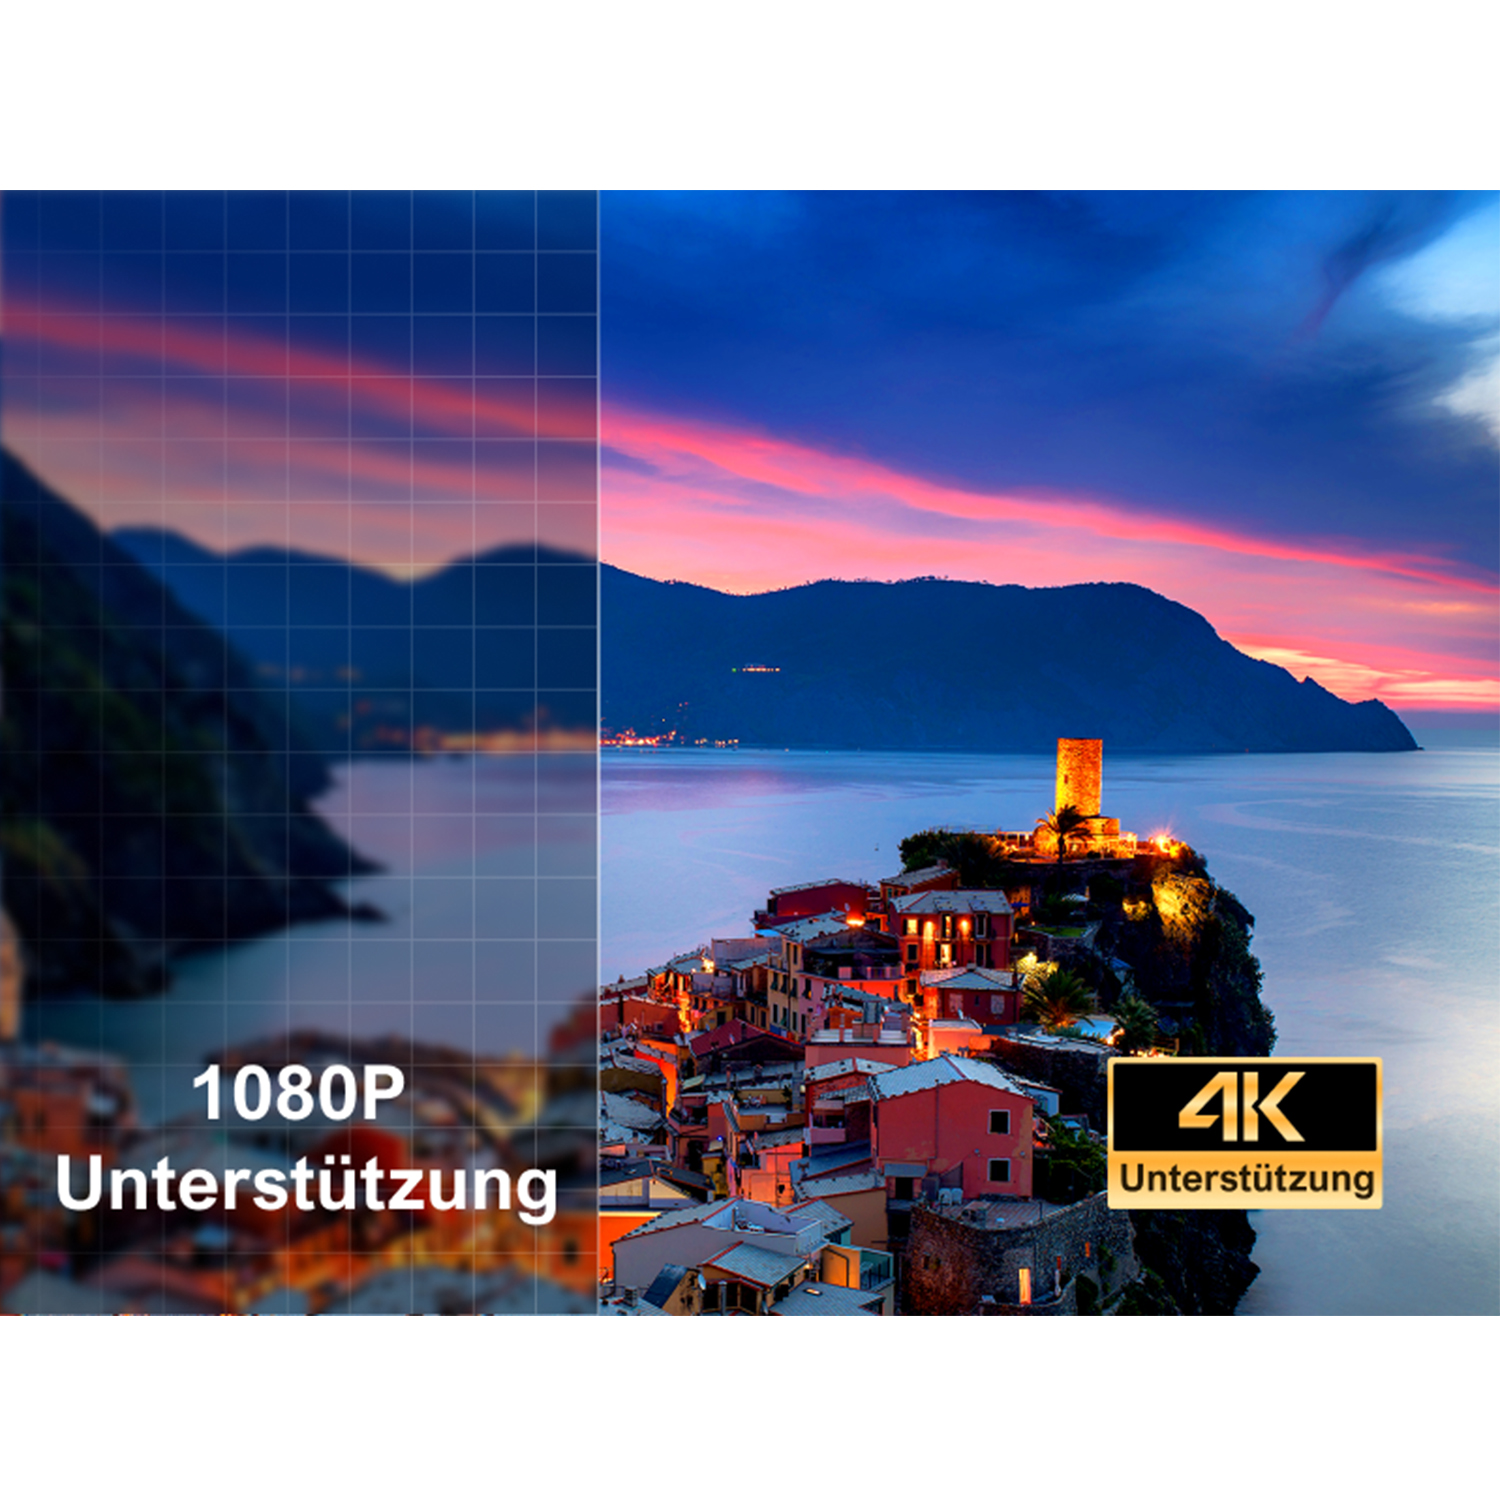 ULTIMEA 1080P HD ANSI-Lumen) P60 WLAN Native Bluetooth Full Beamer(Full-HD, 900